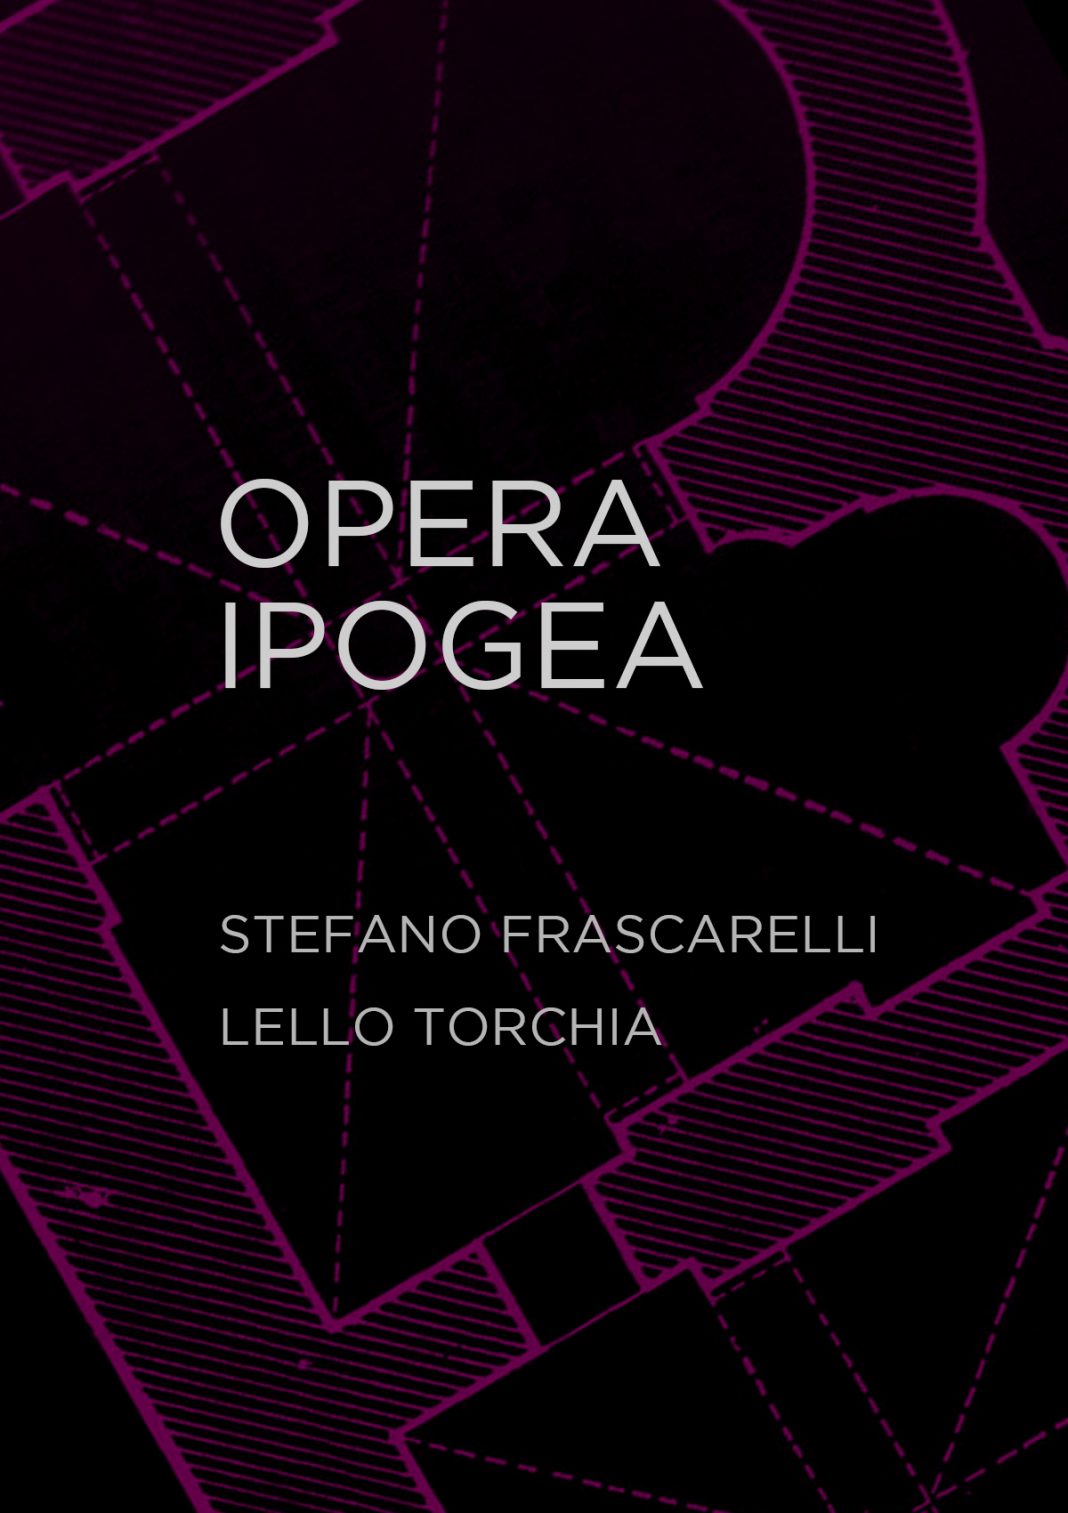 Stefano Frascarelli / Lello Torchia – Opera Ipogeahttps://www.exibart.com/repository/media/eventi/2017/12/stefano-frascarelli-lello-torchia-8211-opera-ipogea-1068x1513.jpg